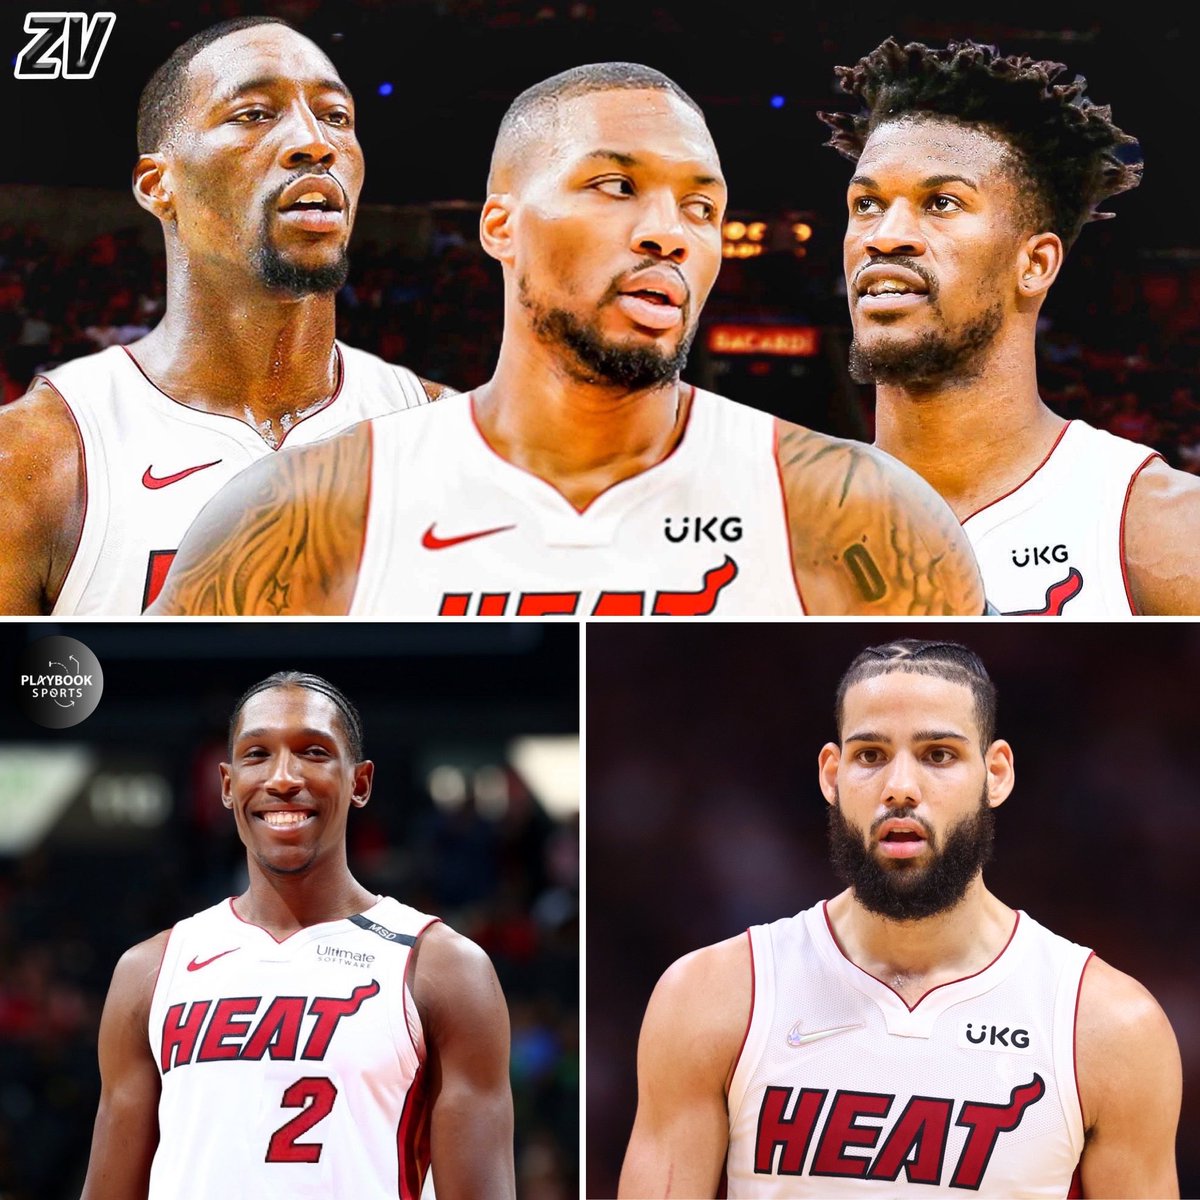 RT @PlaybookSN: How many games is this Miami Heat starting lineup winning? https://t.co/x0RyHZ9K9J